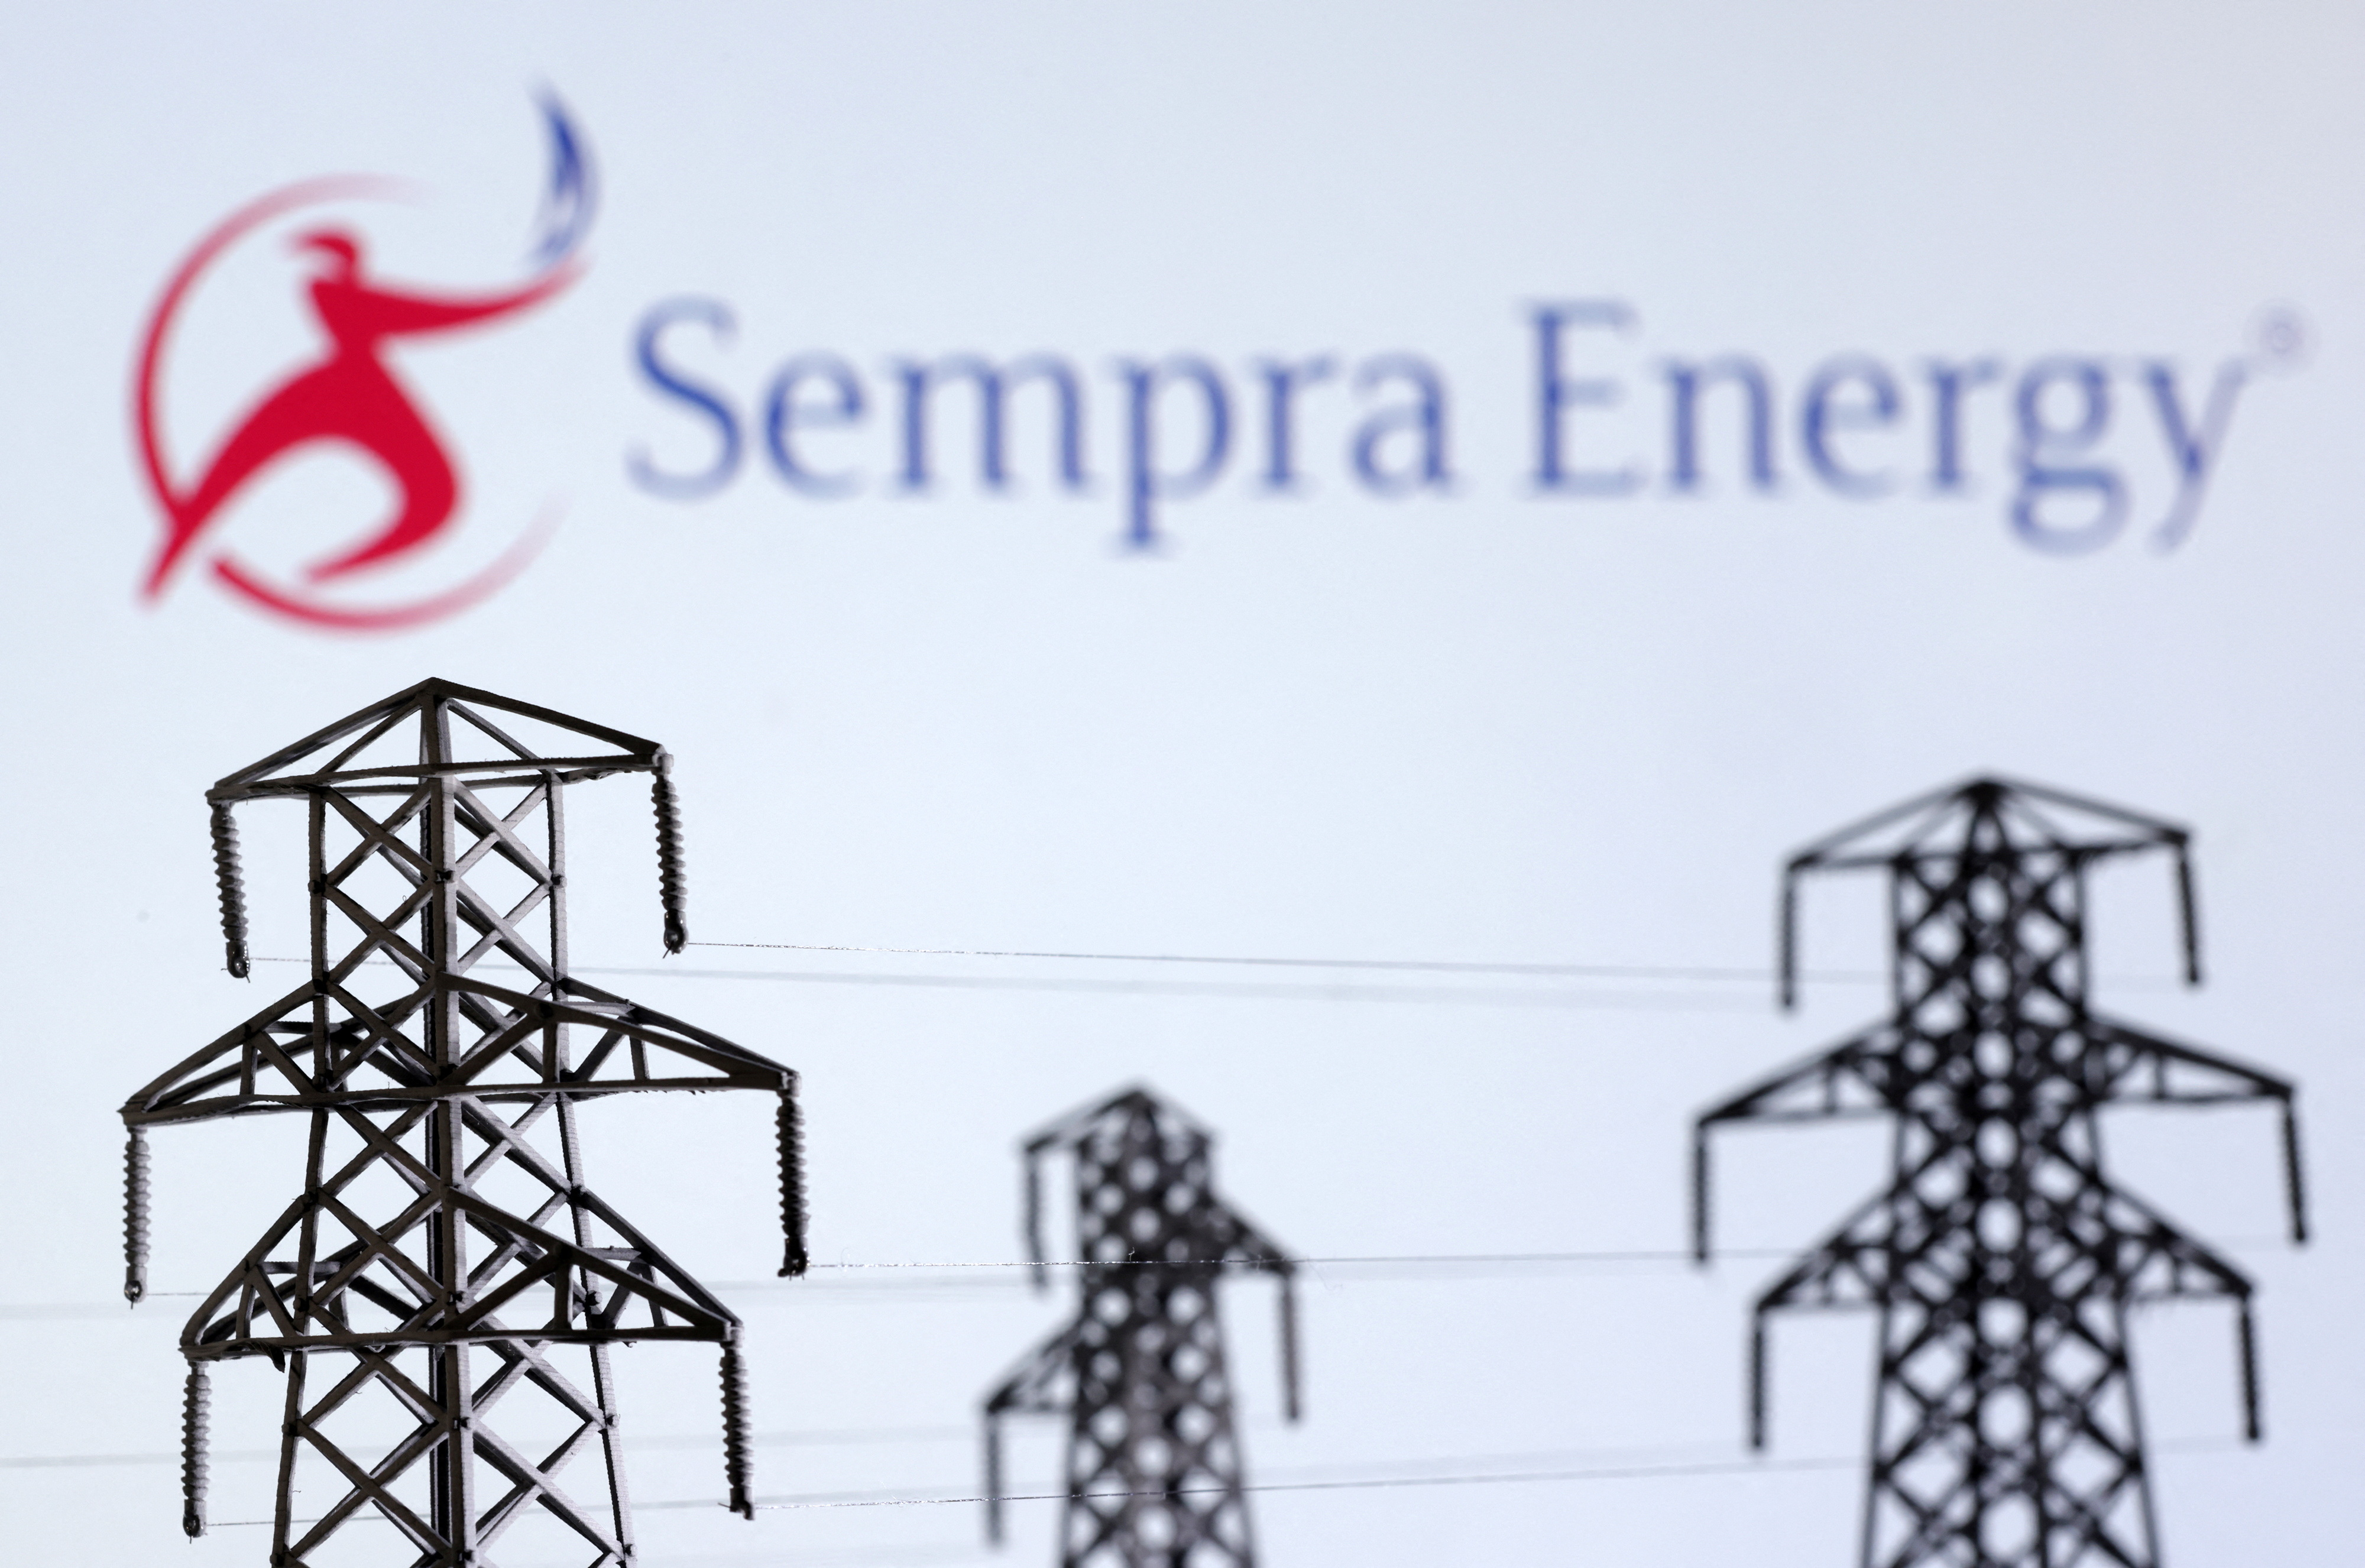 Illustration shows Electric power transmission pylon miniatures and Sempra Energy logo